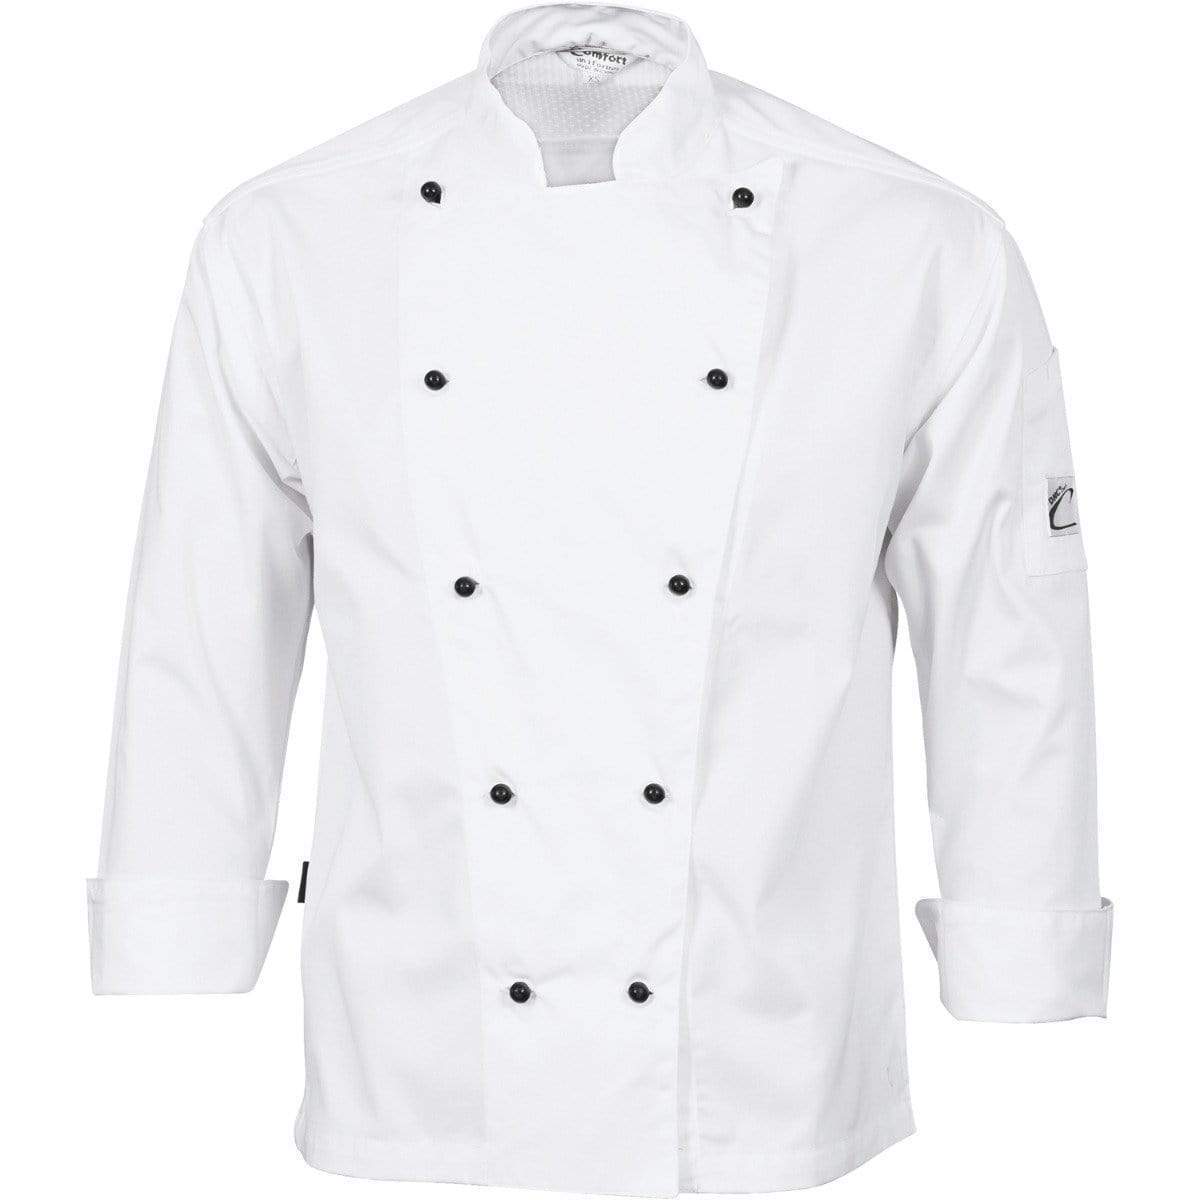 Dnc Workwear Three-way Airflow Long Sleeve Chef Jacket - 1106 Hospitality & Chefwear DNC Workwear White XS 